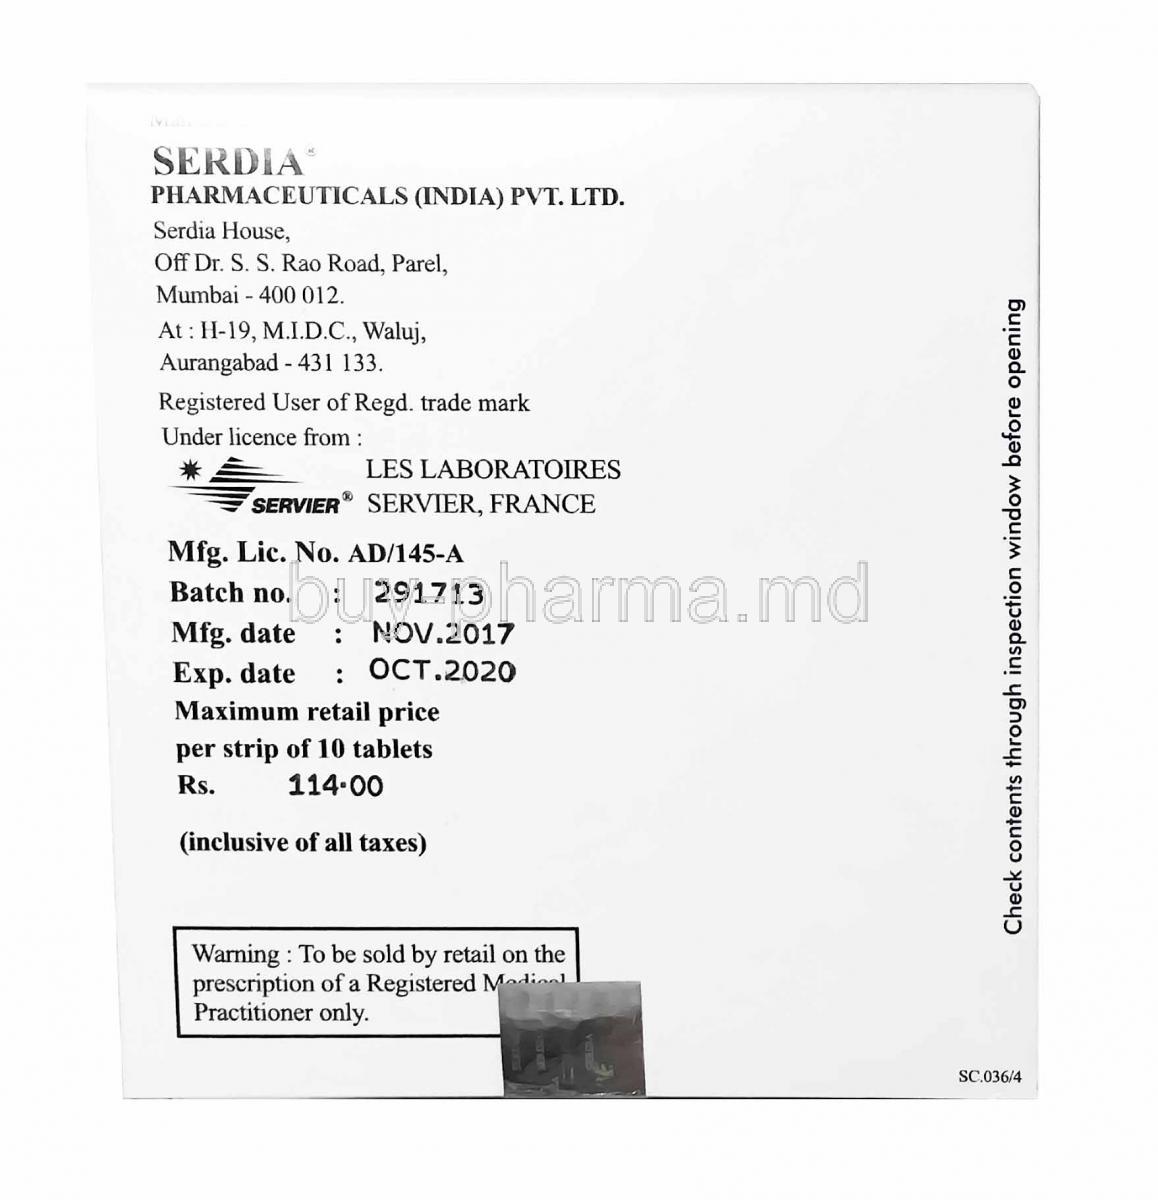 Daflon – Diosmin Hesperidin 500mg (20 Tab) – Pharmacy PVR